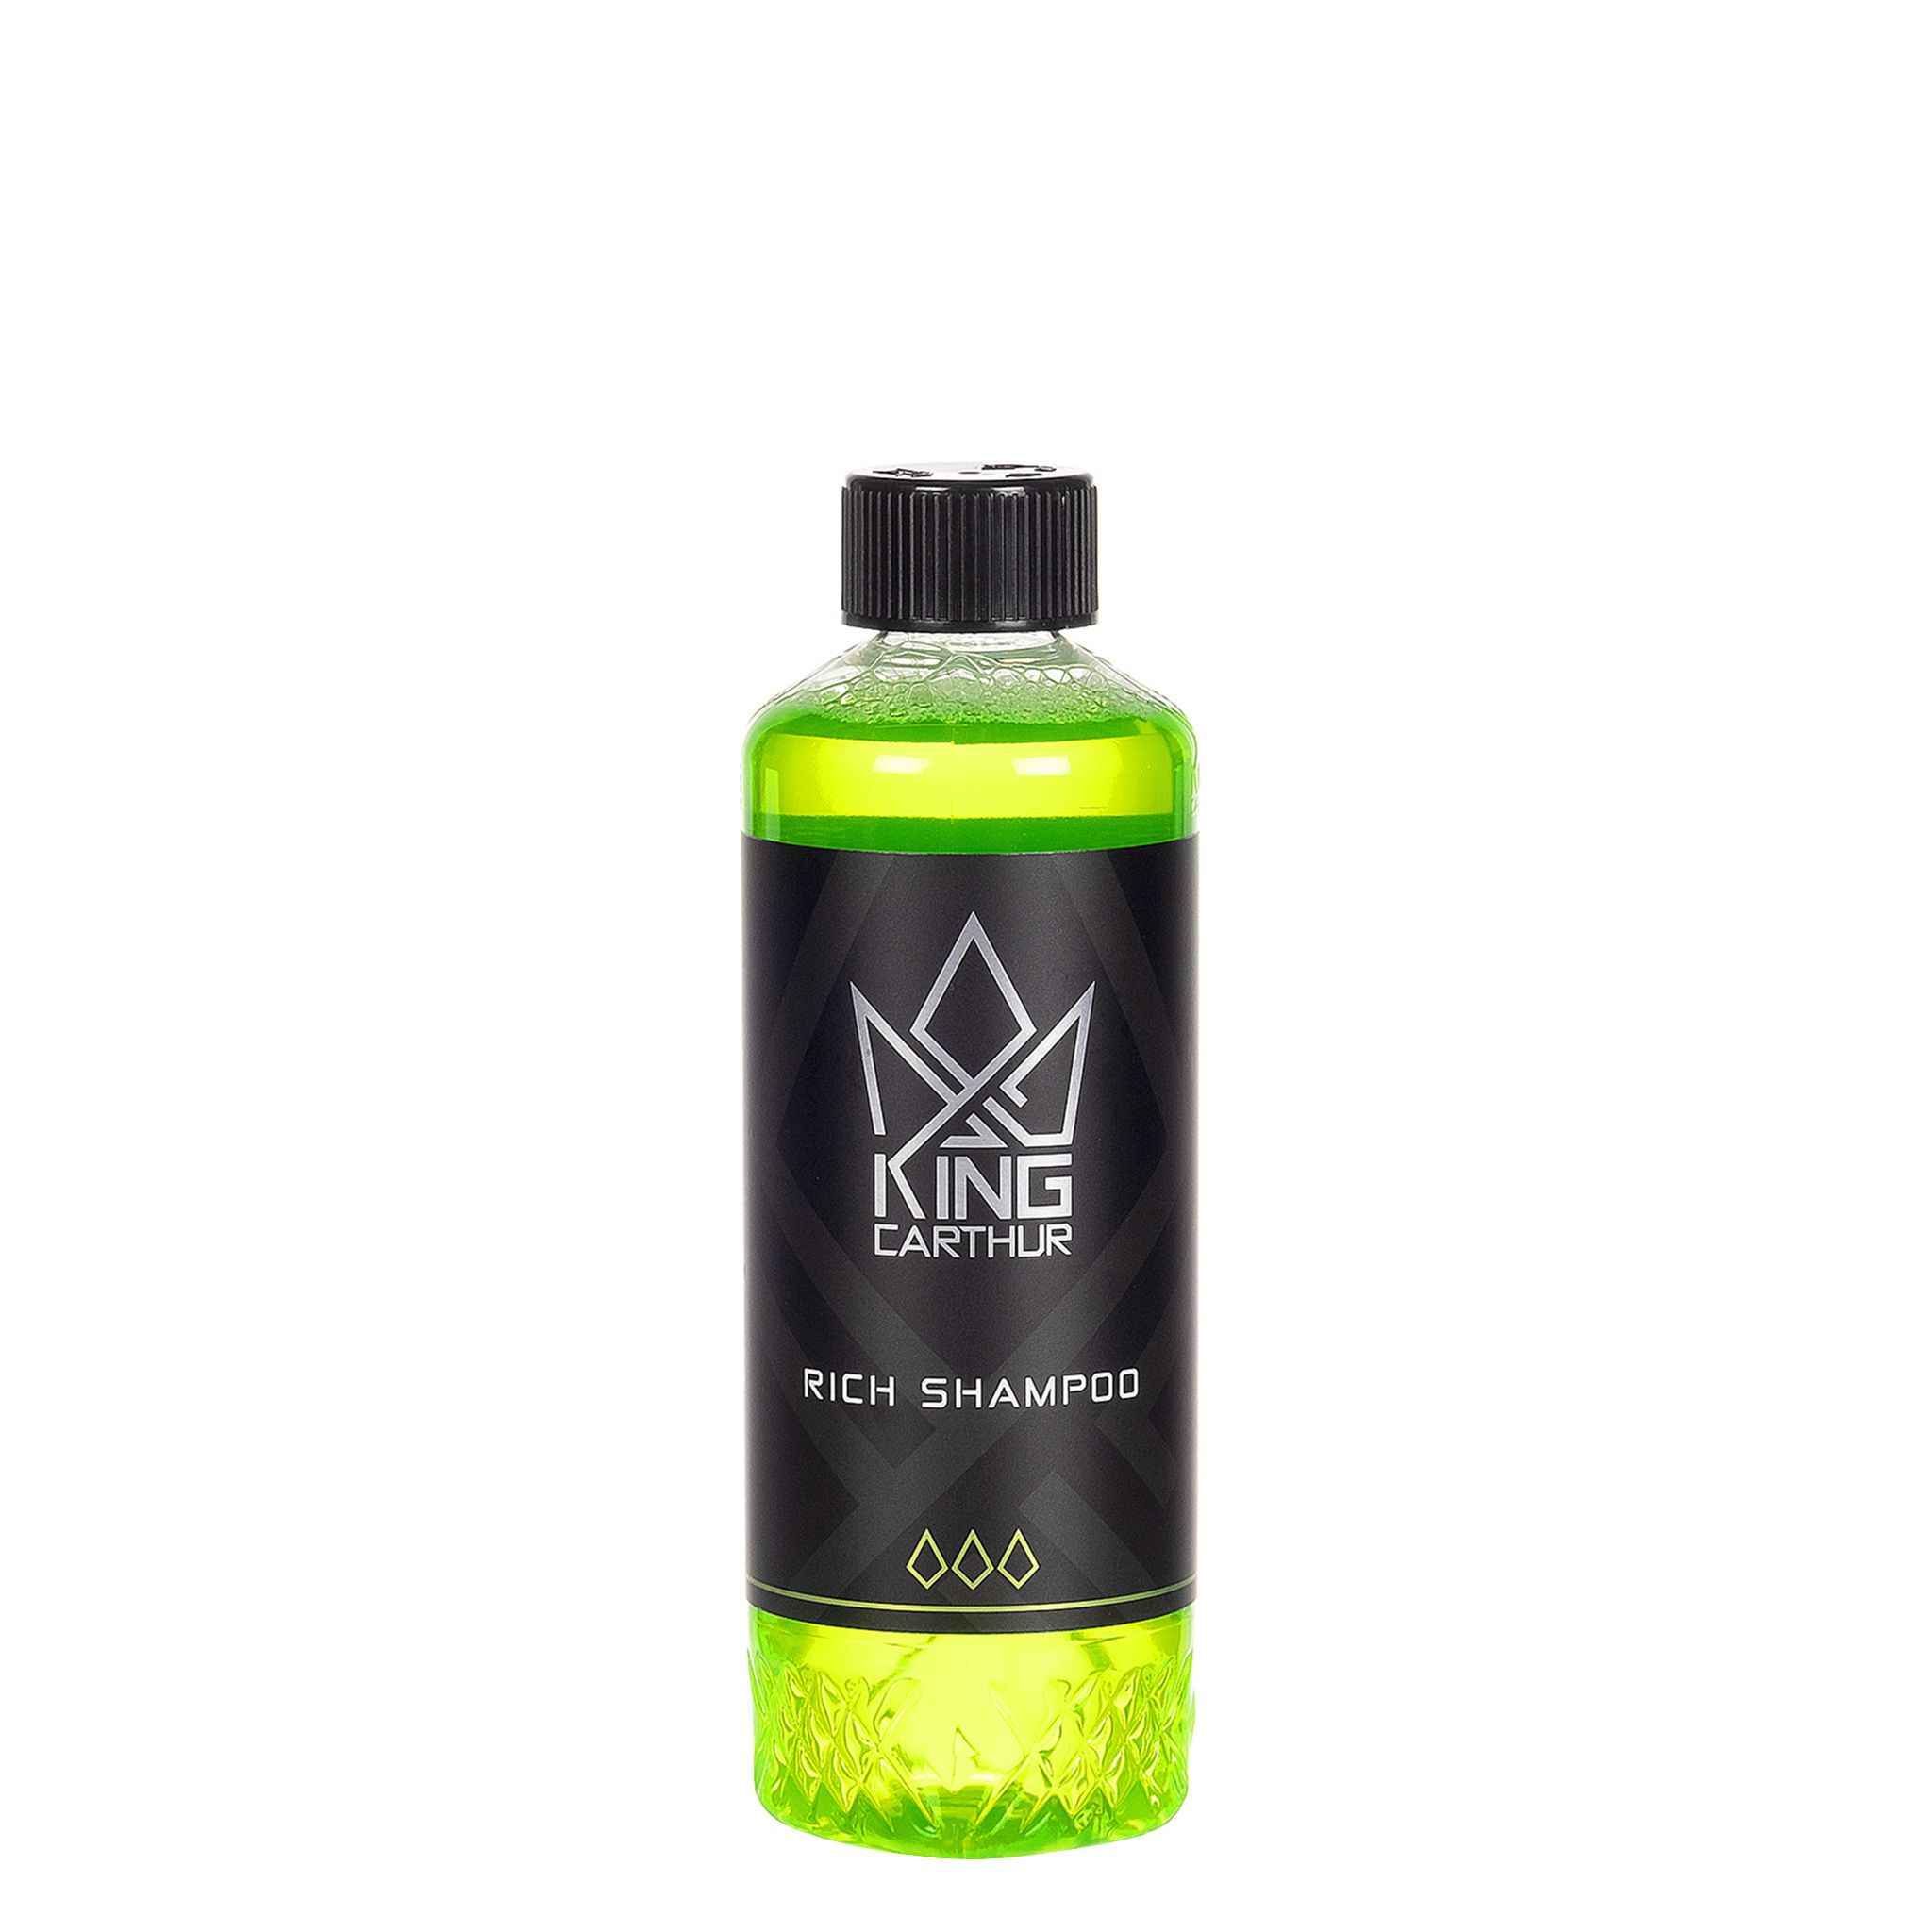 Bilshampo King Carthur Rich Shampoo, 500 ml, 500 ml